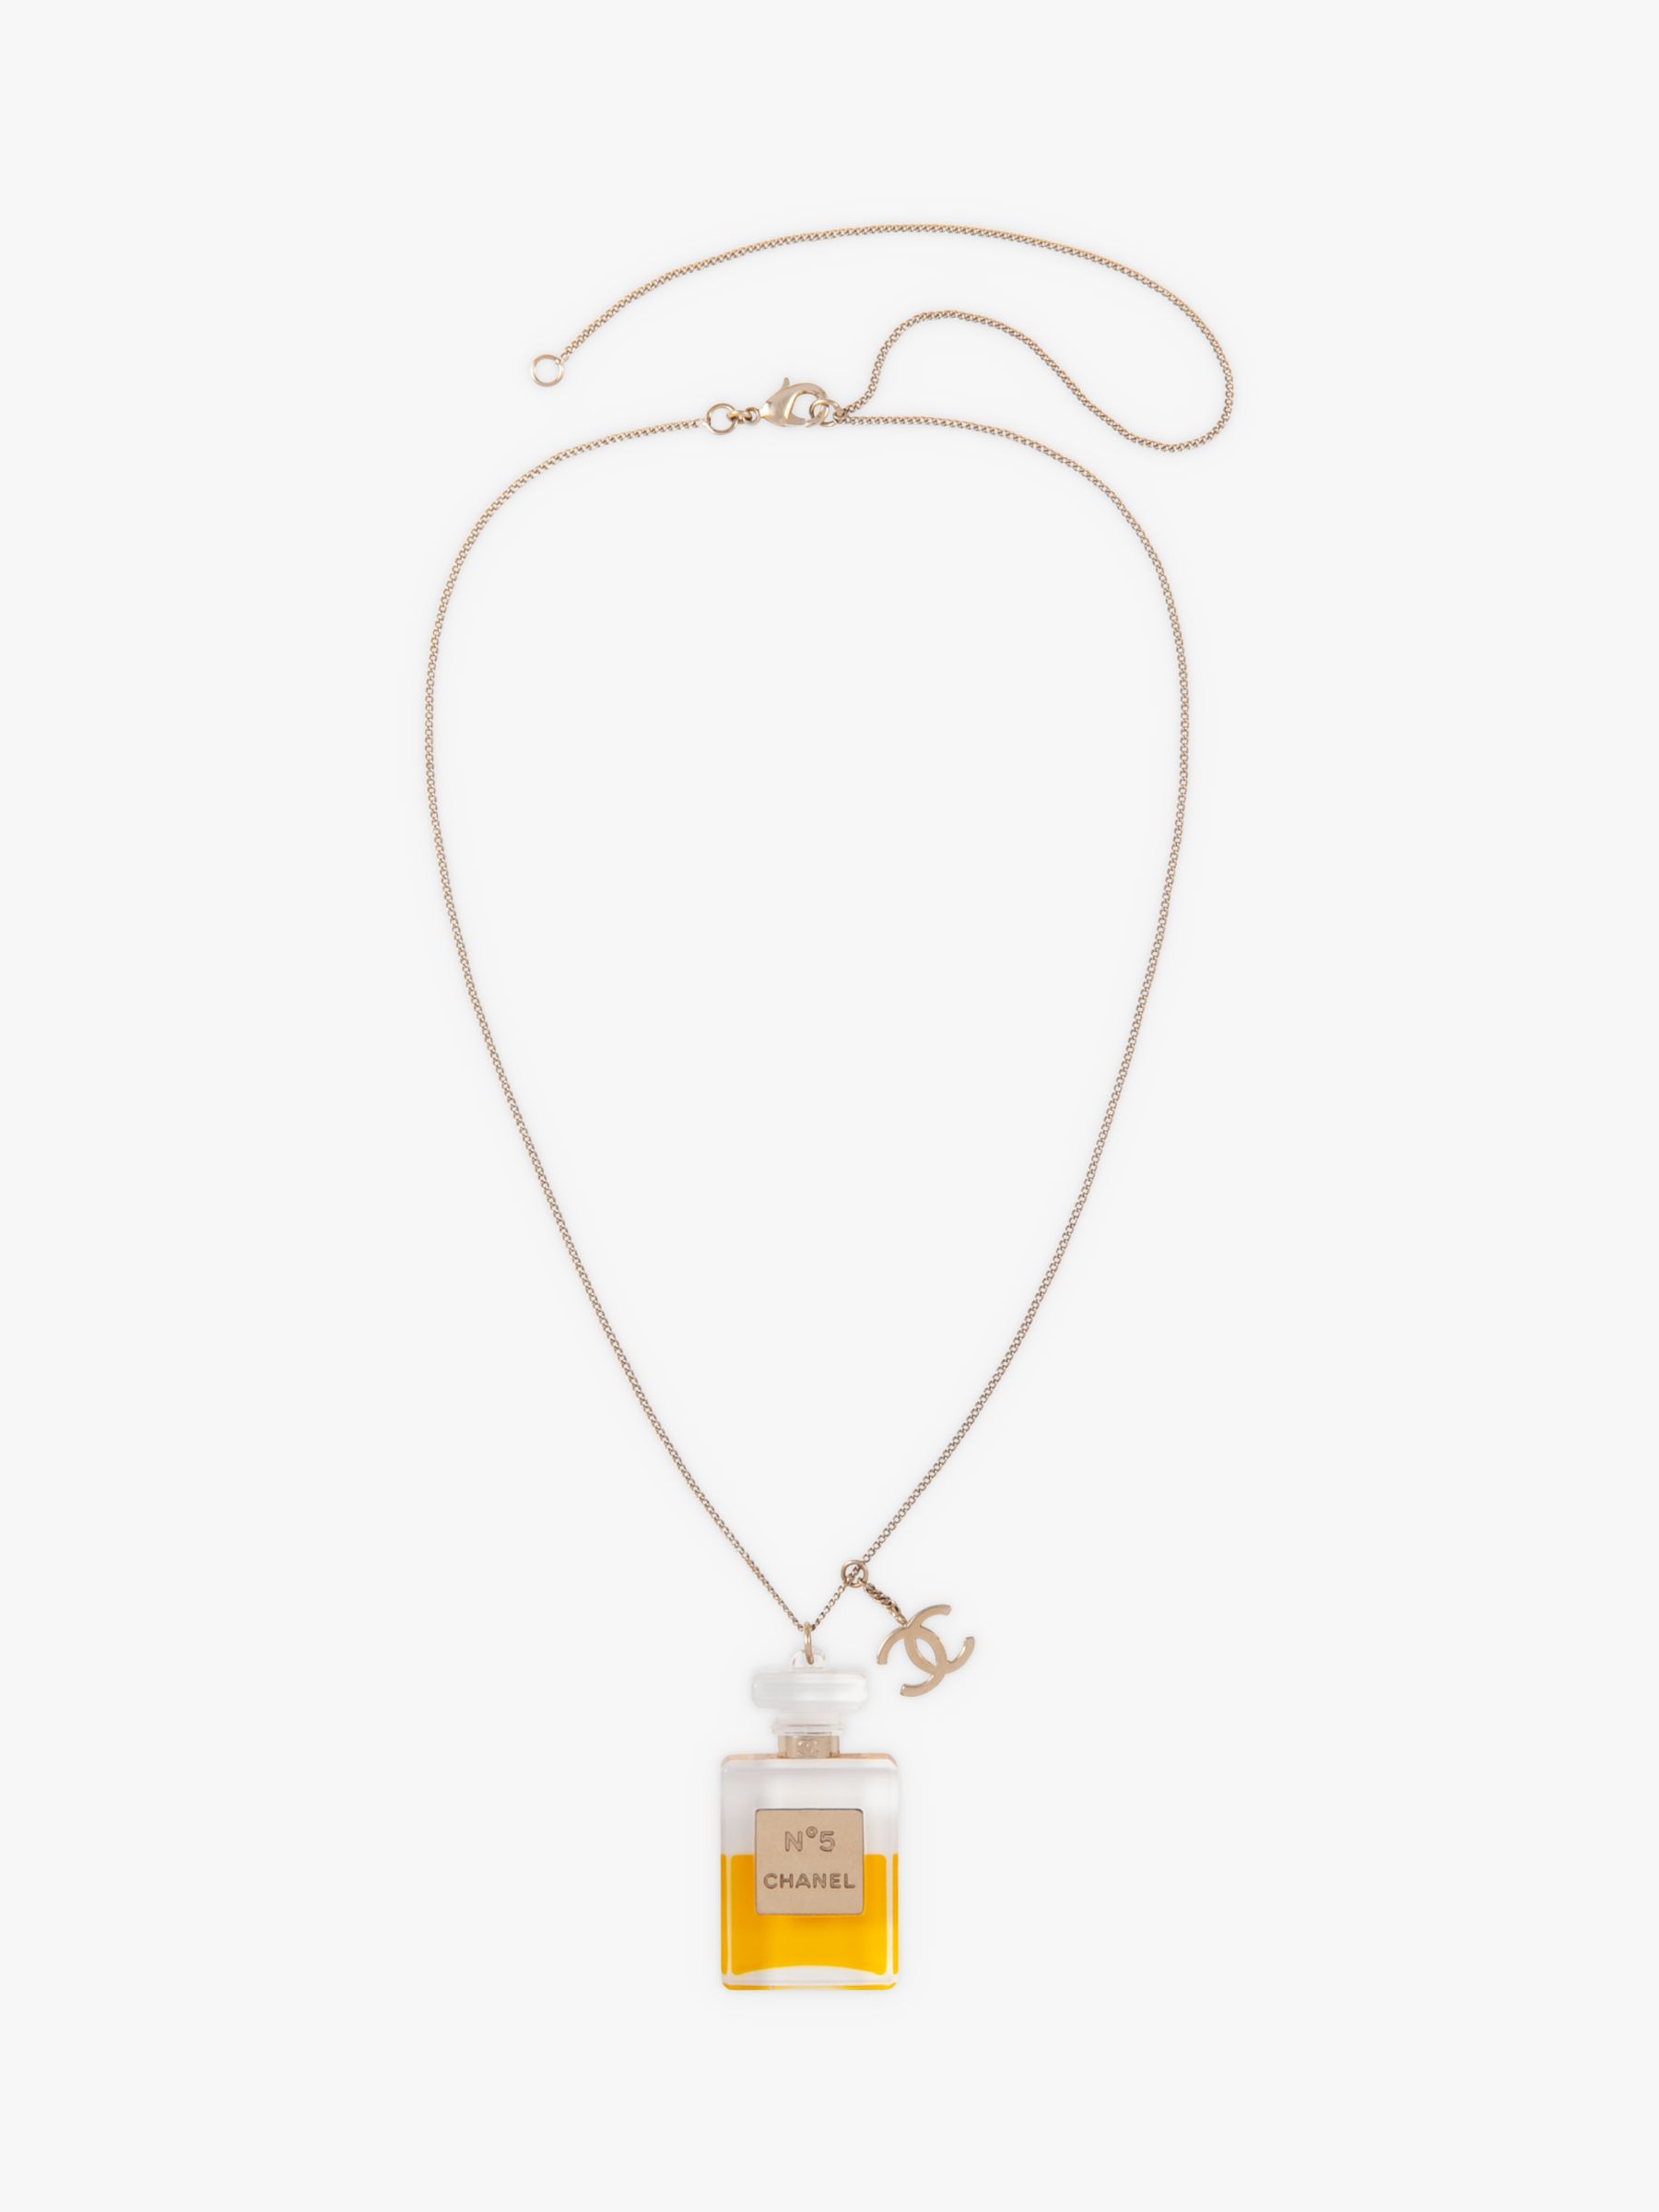 CHANEL N°5 Perfume Bottle C Logo Pendant Keychain HOOK